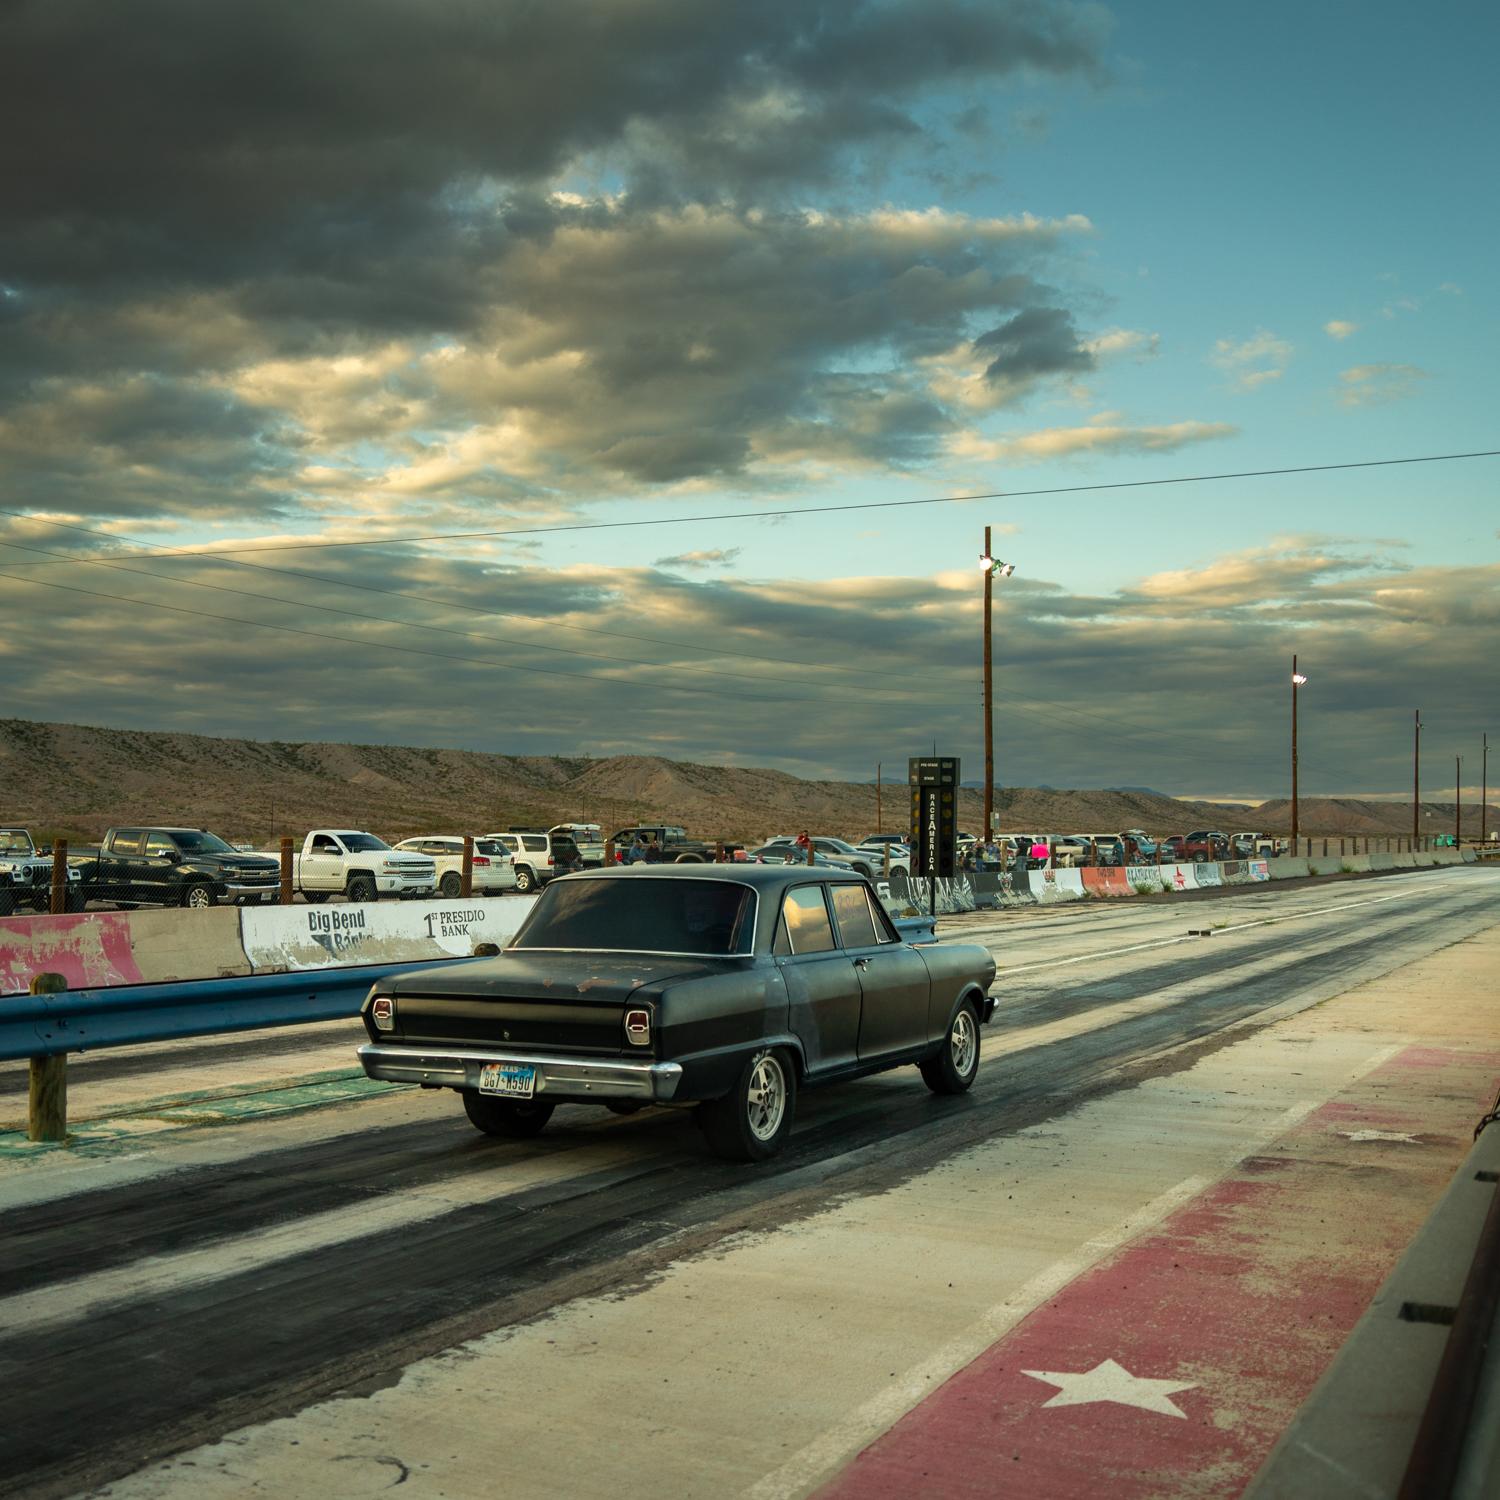 Brian Finke Landscape Photograph - Untitled (Presidio Drag Racing) 